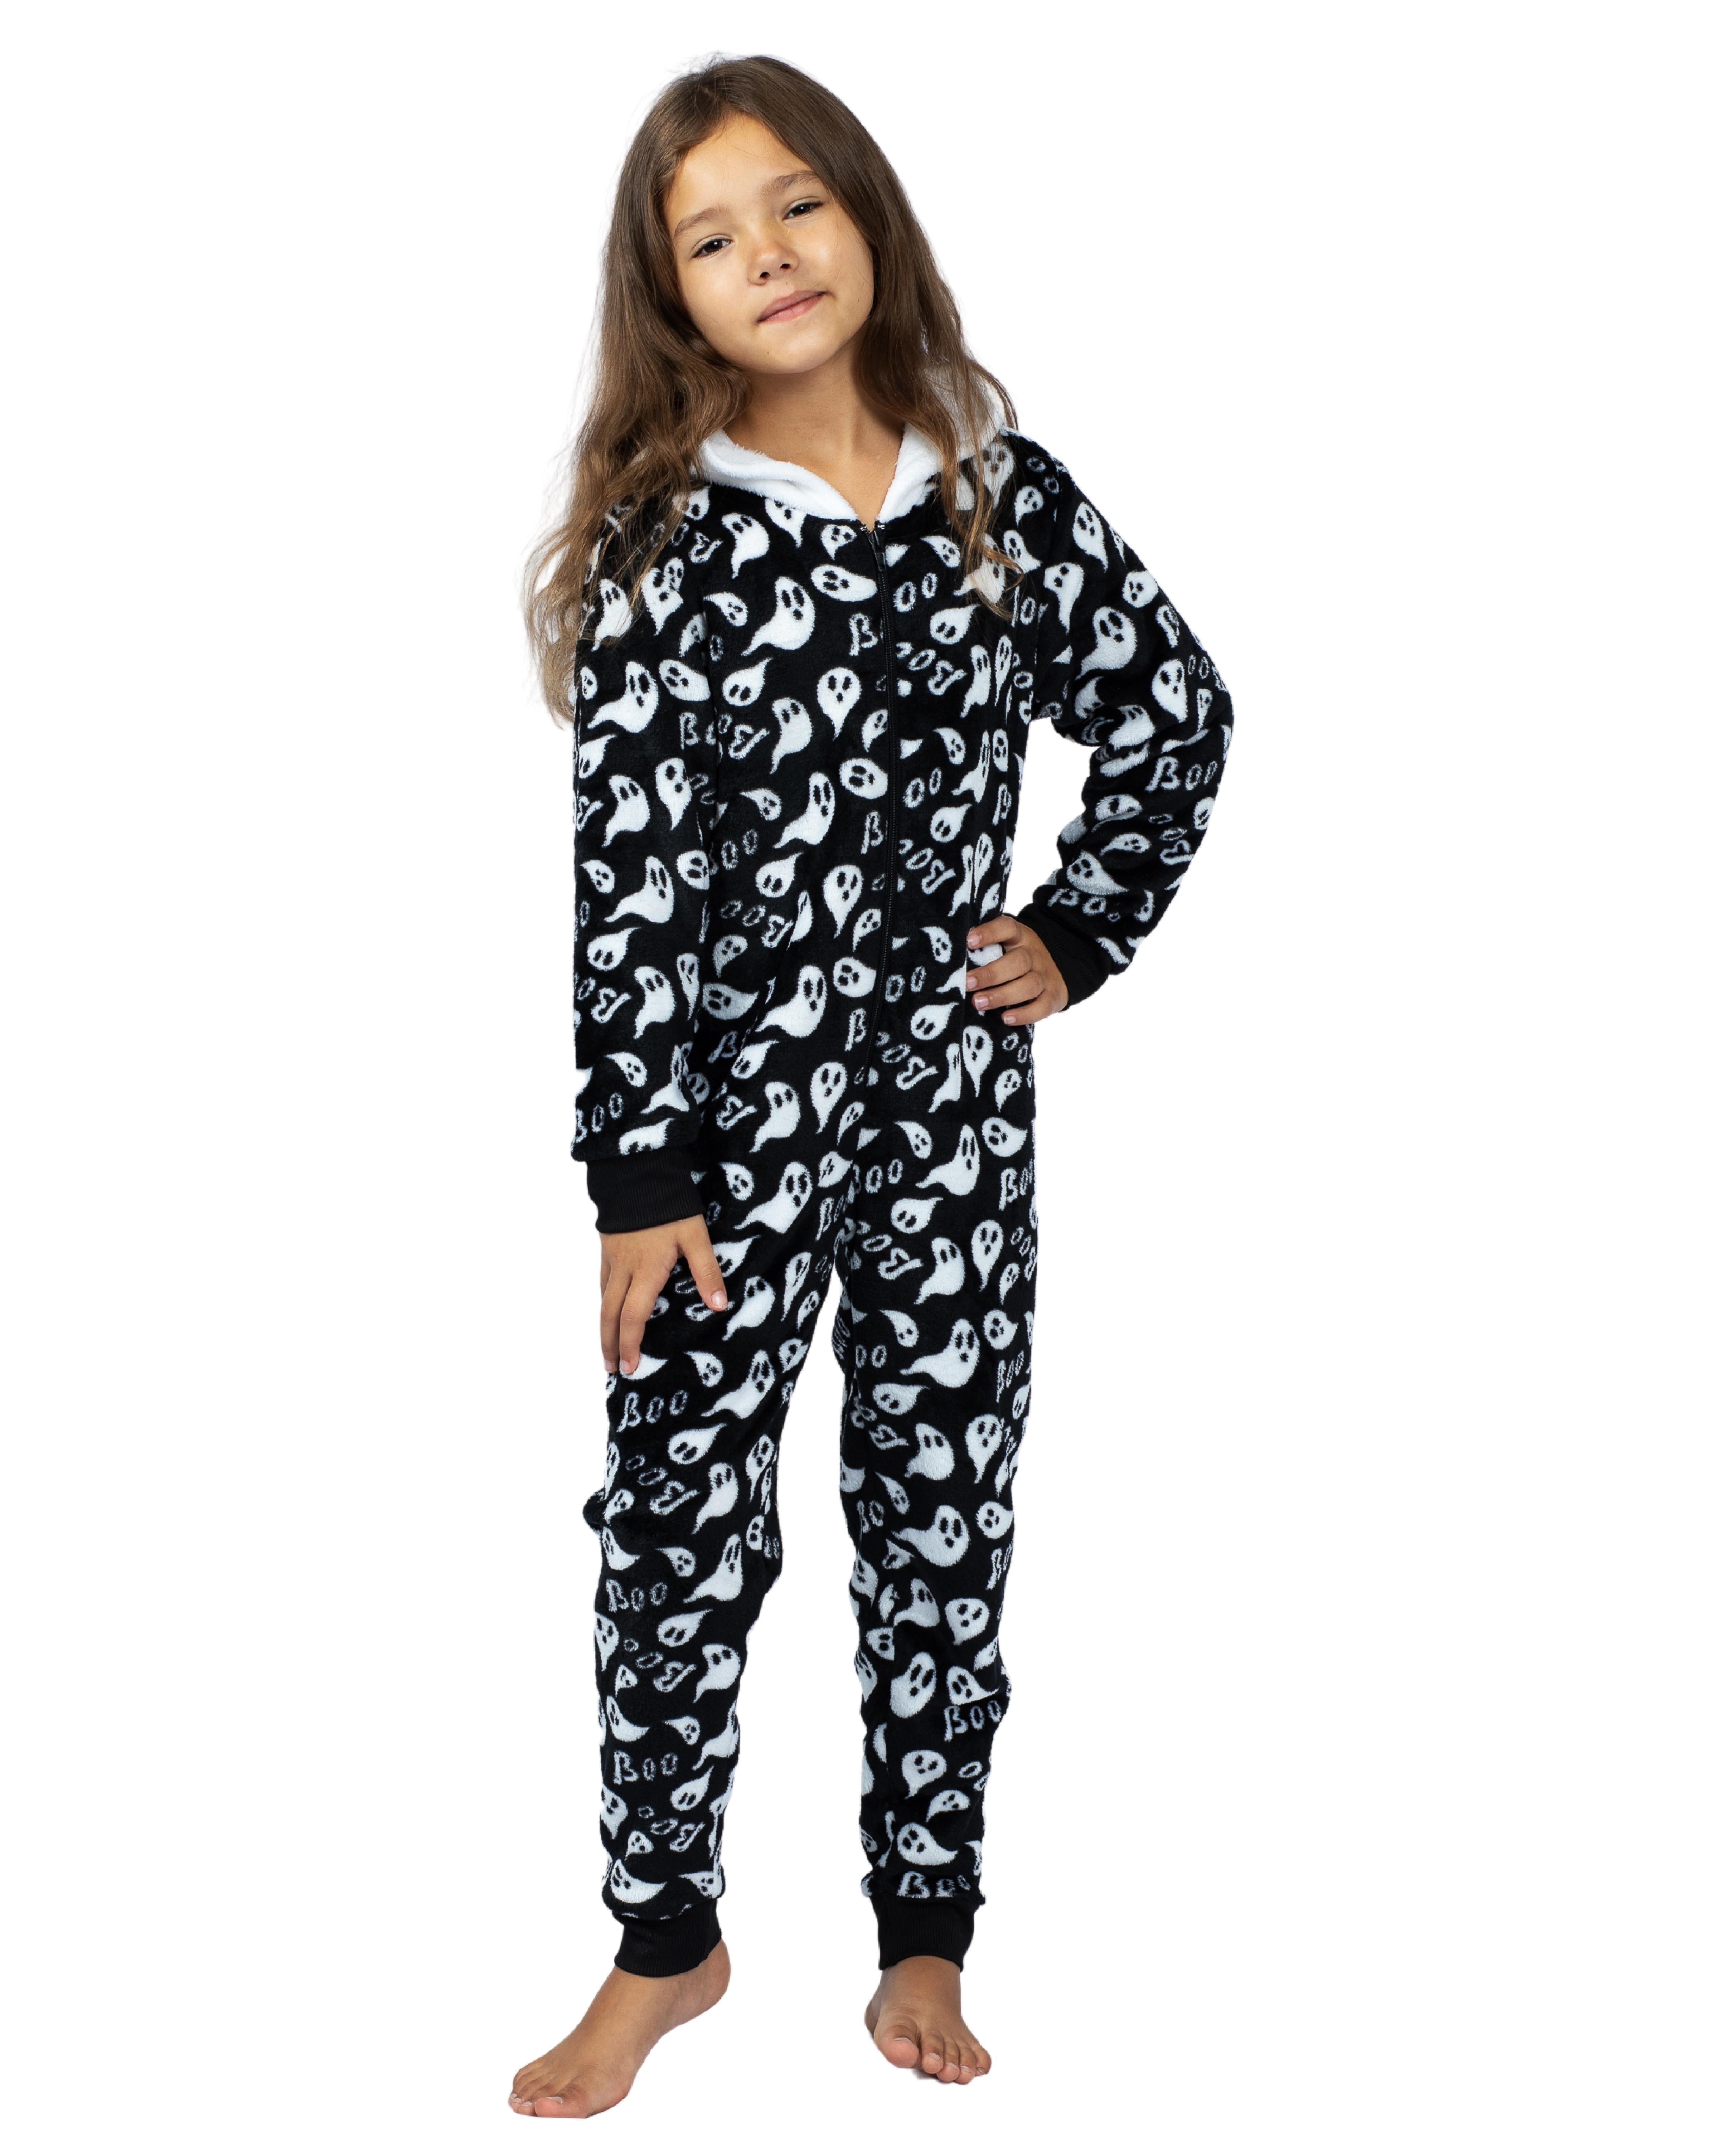 rol Precies Zijn bekend Prestigez Kids Family Ghost Onesie Pajama Costume Union Suit Sleepwear With  Hood, Mask, And Socks, Black - Ghost, Size: Kids - 8 - Walmart.com